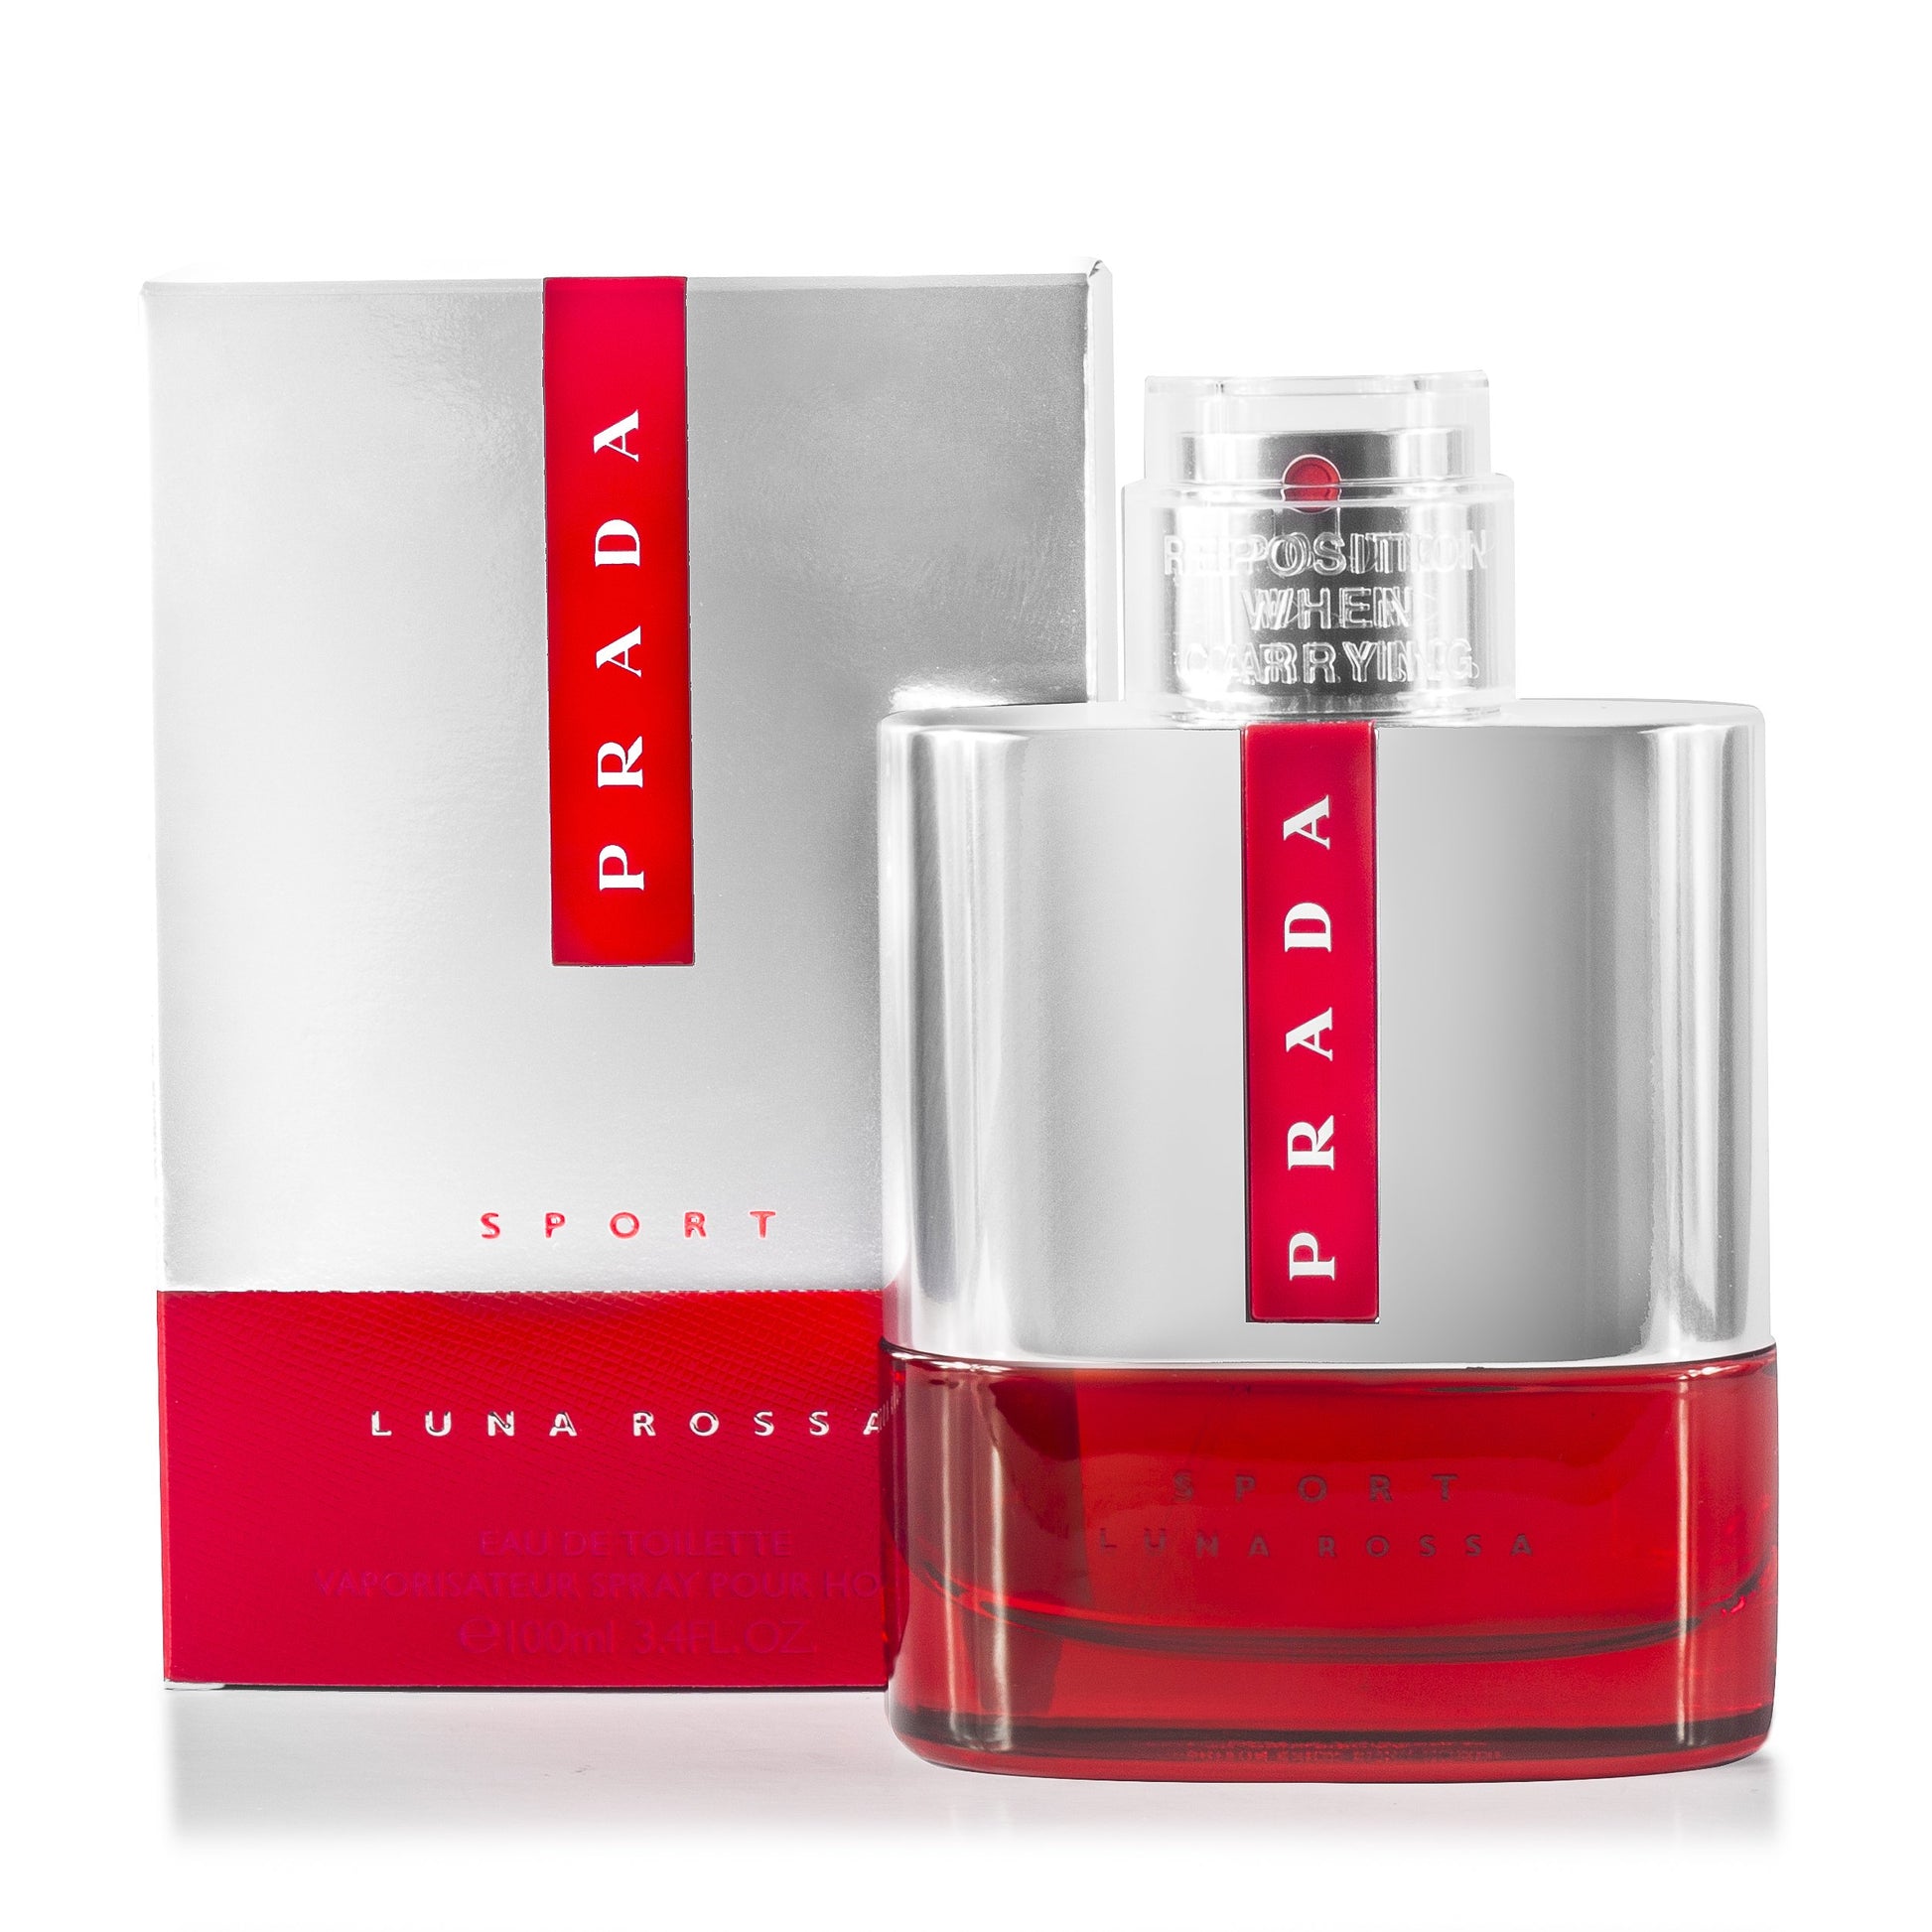 Luna Rossa Sport Eau de Toilette Spray for Men by Prada 3.4 oz. Click to open in modal